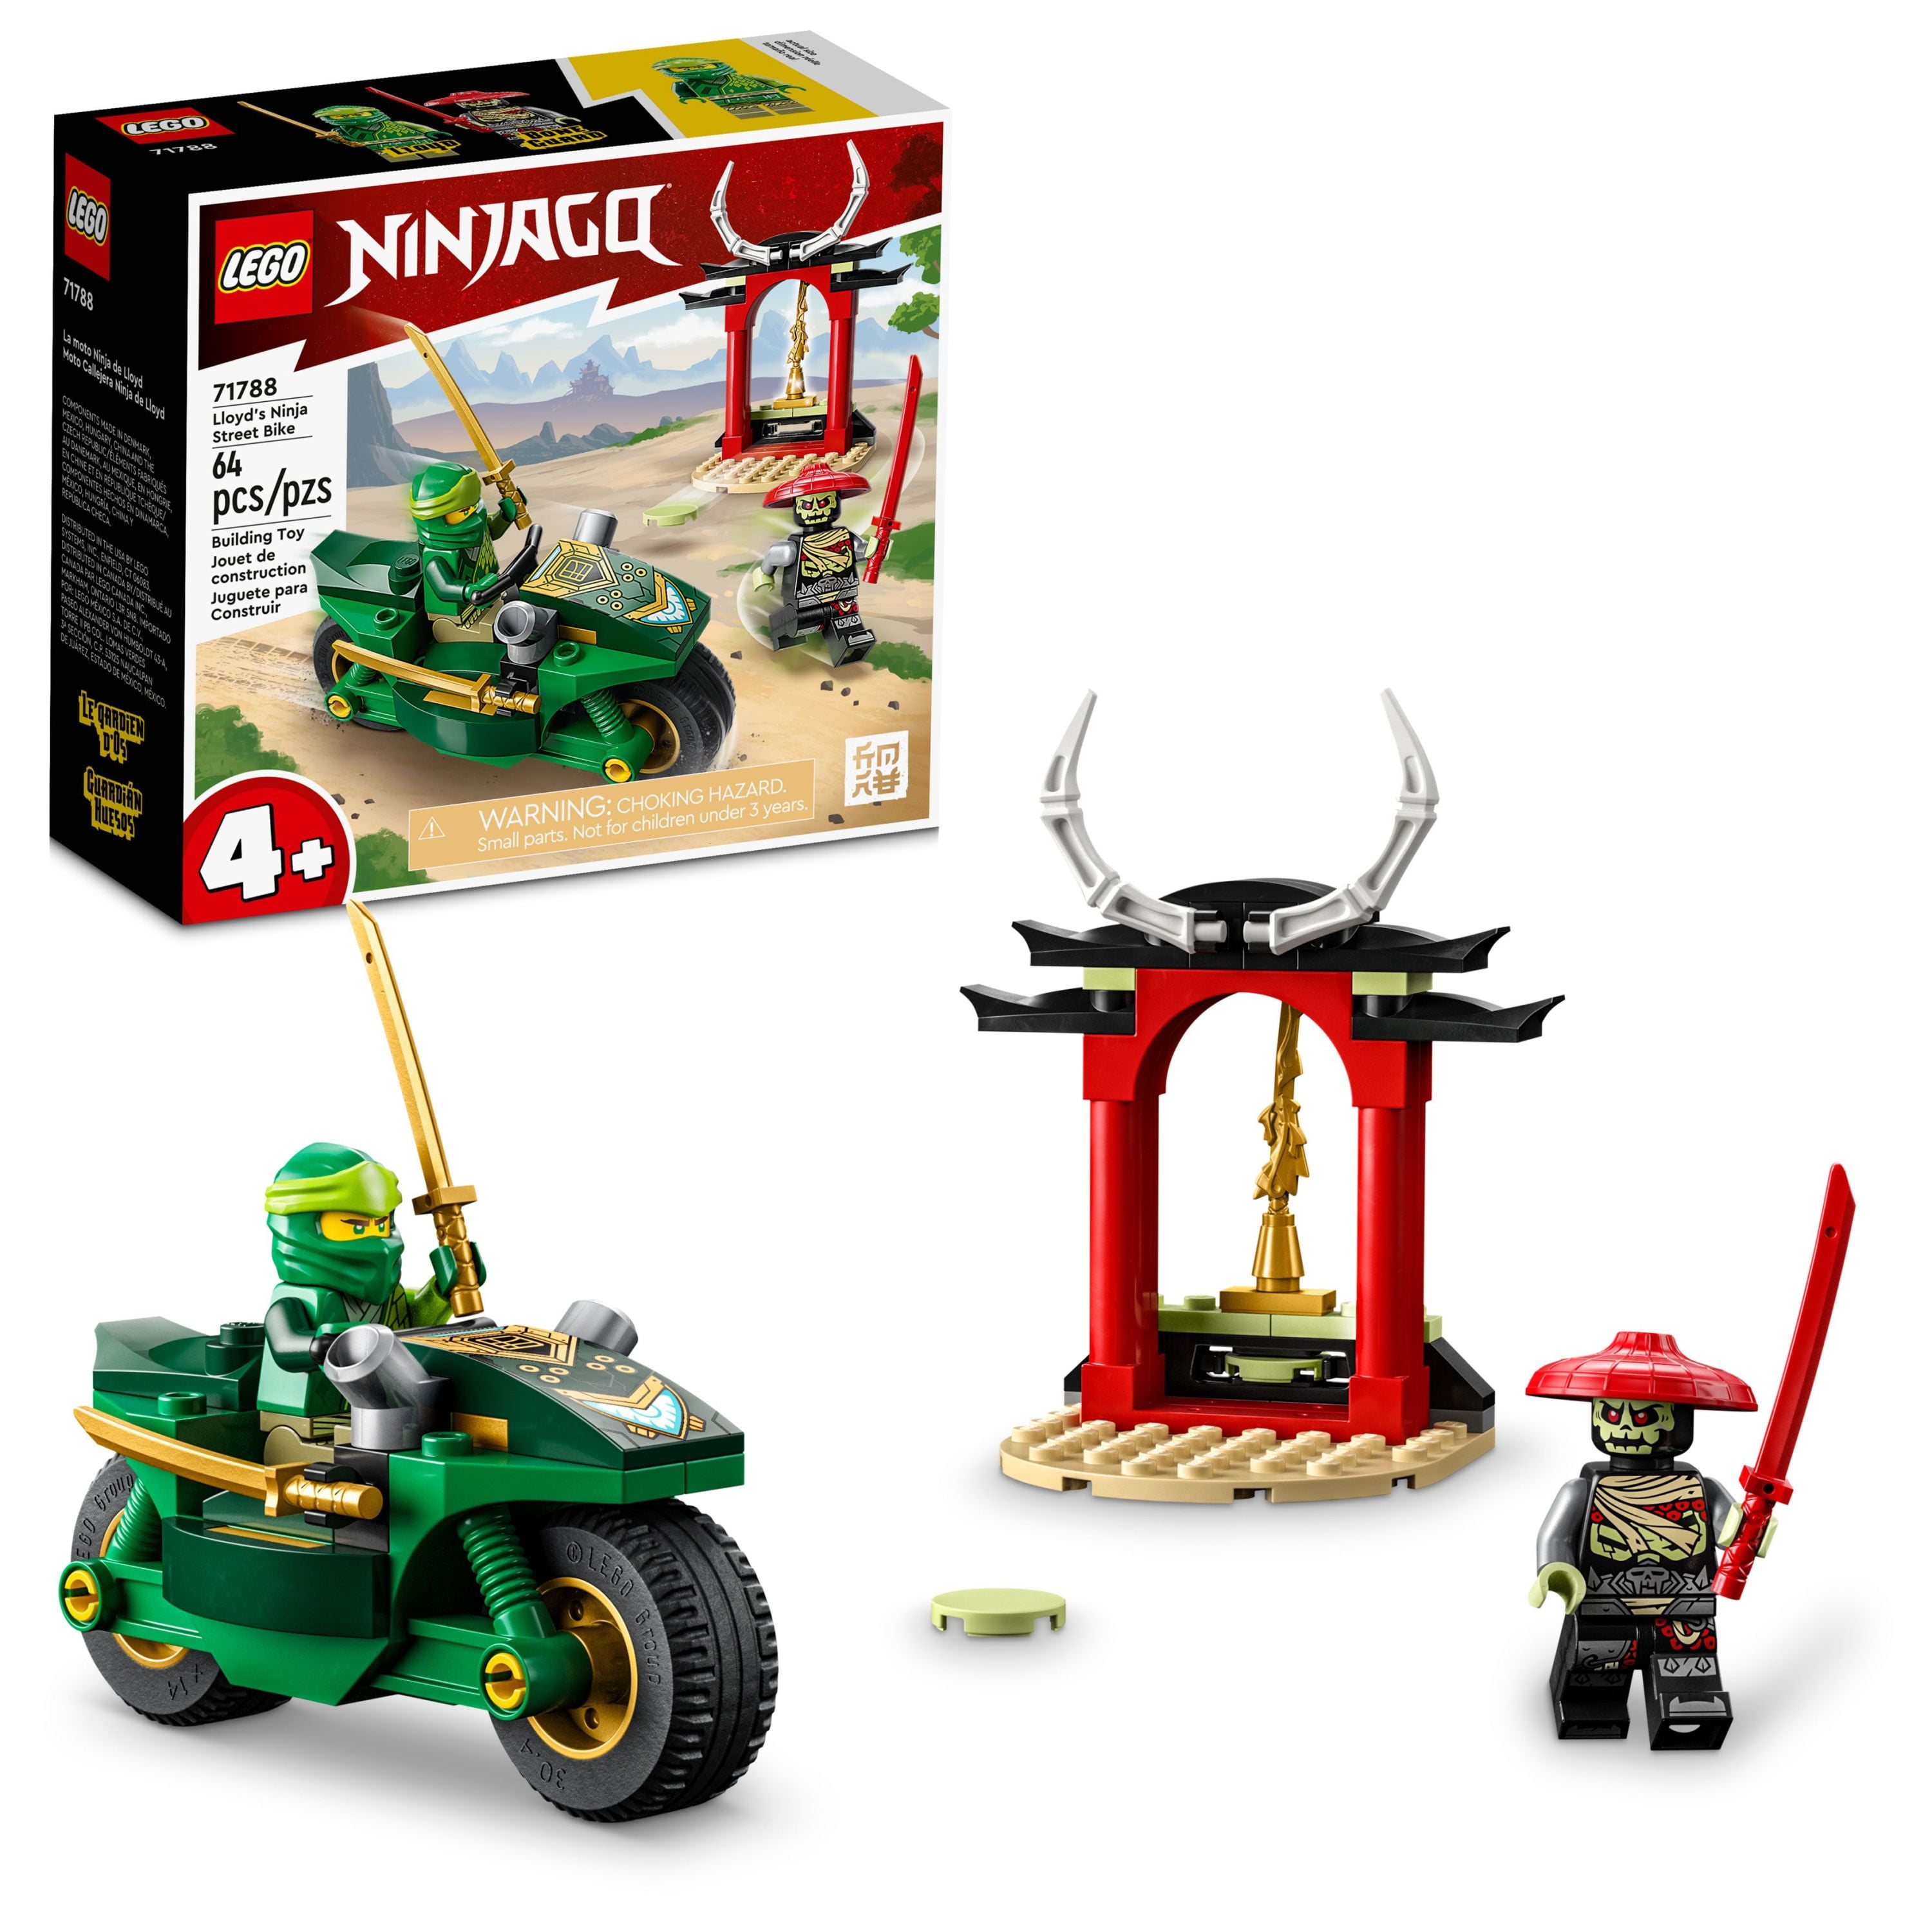 LEGO NINJAGO Fire Fang 70674 Snake Action Building Toy Kids with Ninja Minifigures (463 -